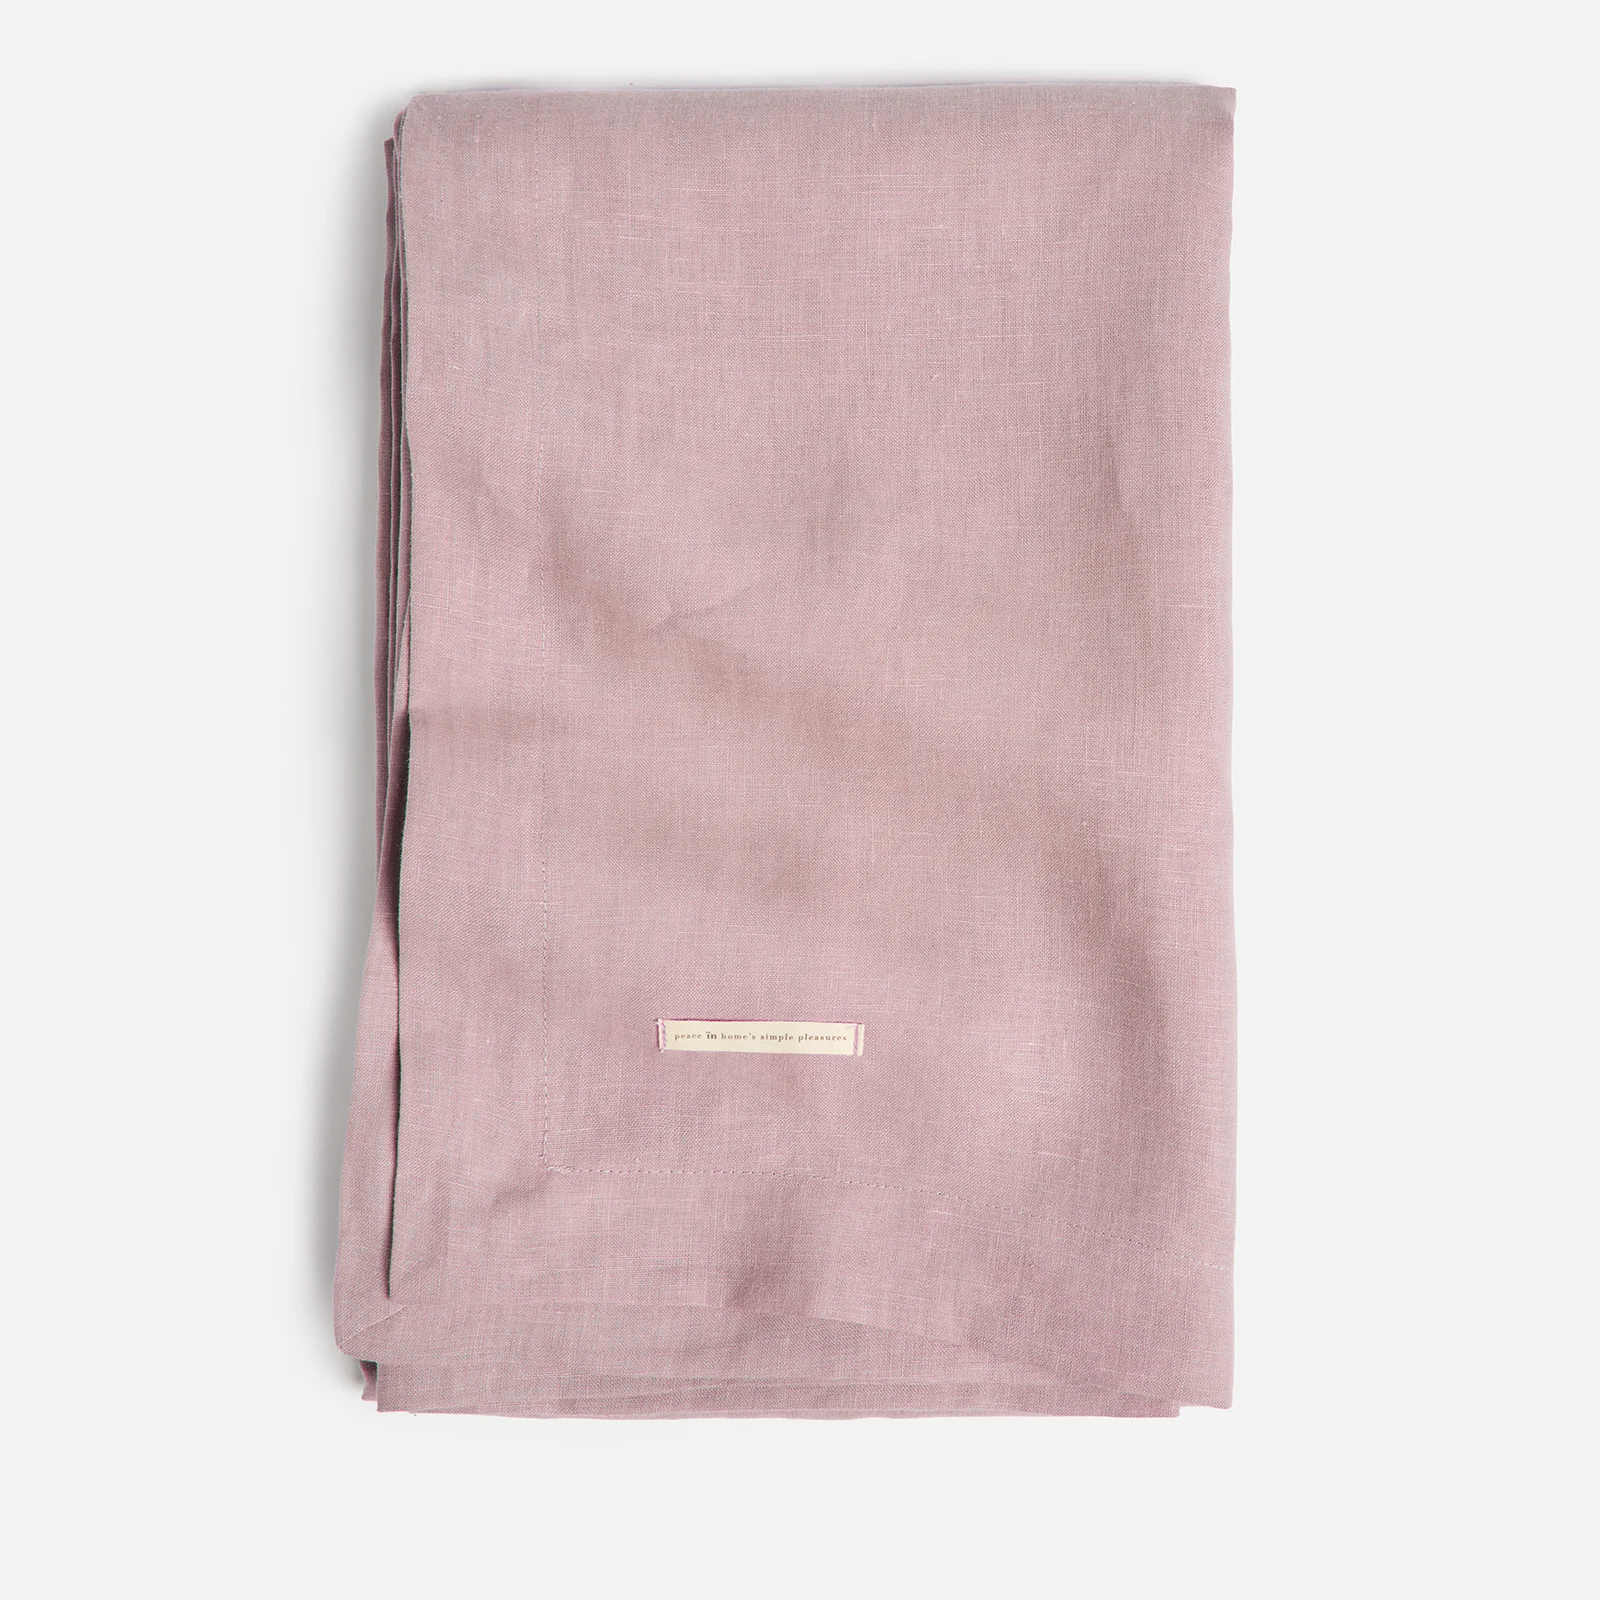 ïn home Linen Table Cloth - Pink - 160x200cm Image 1